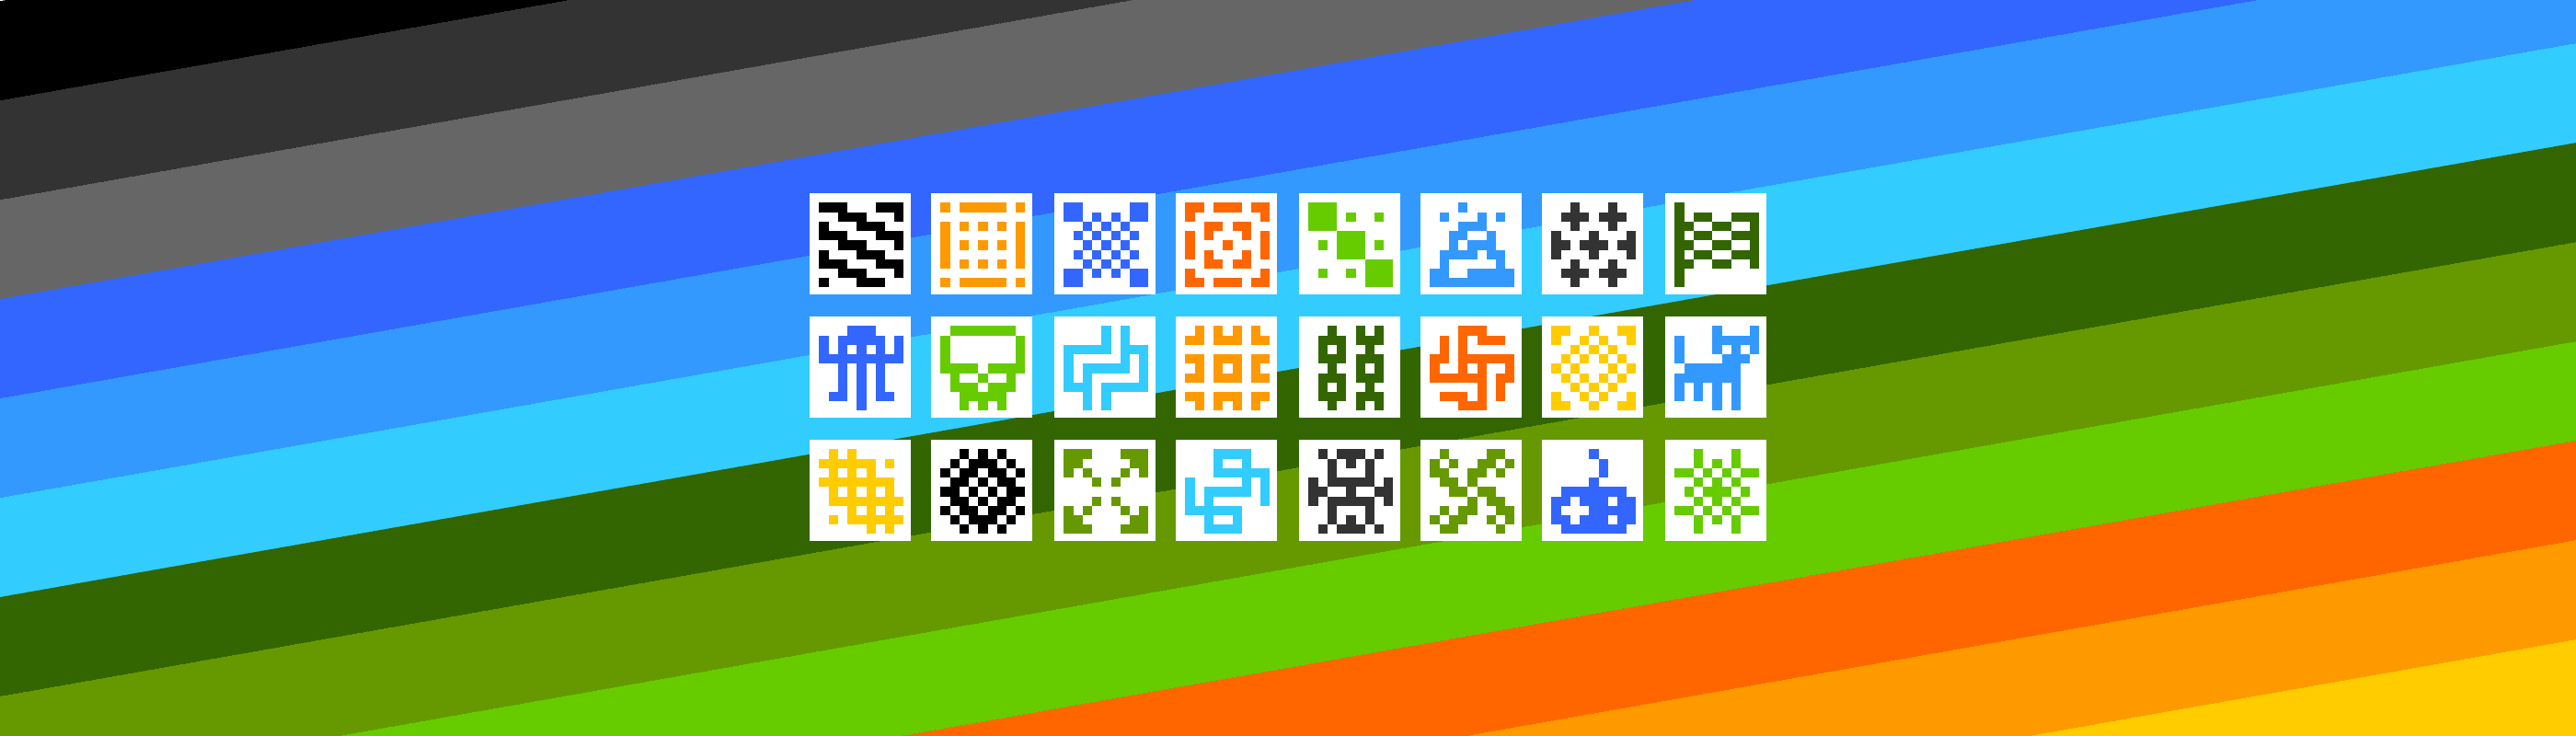 Sudoku Pattern Collection